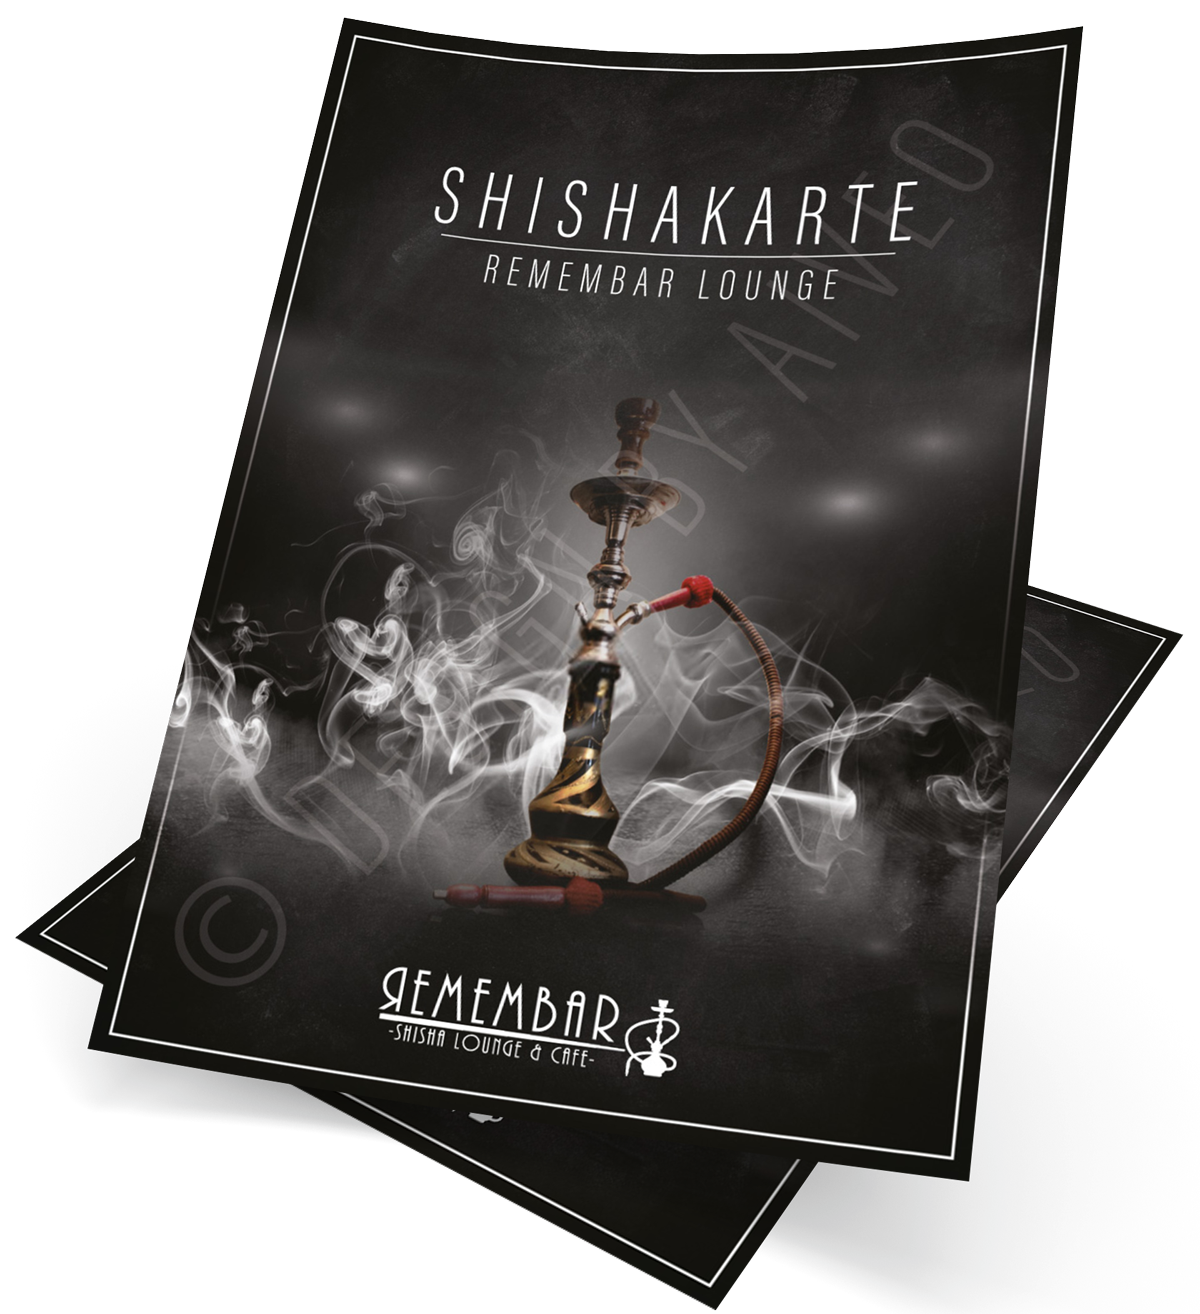 Shishakarte Design